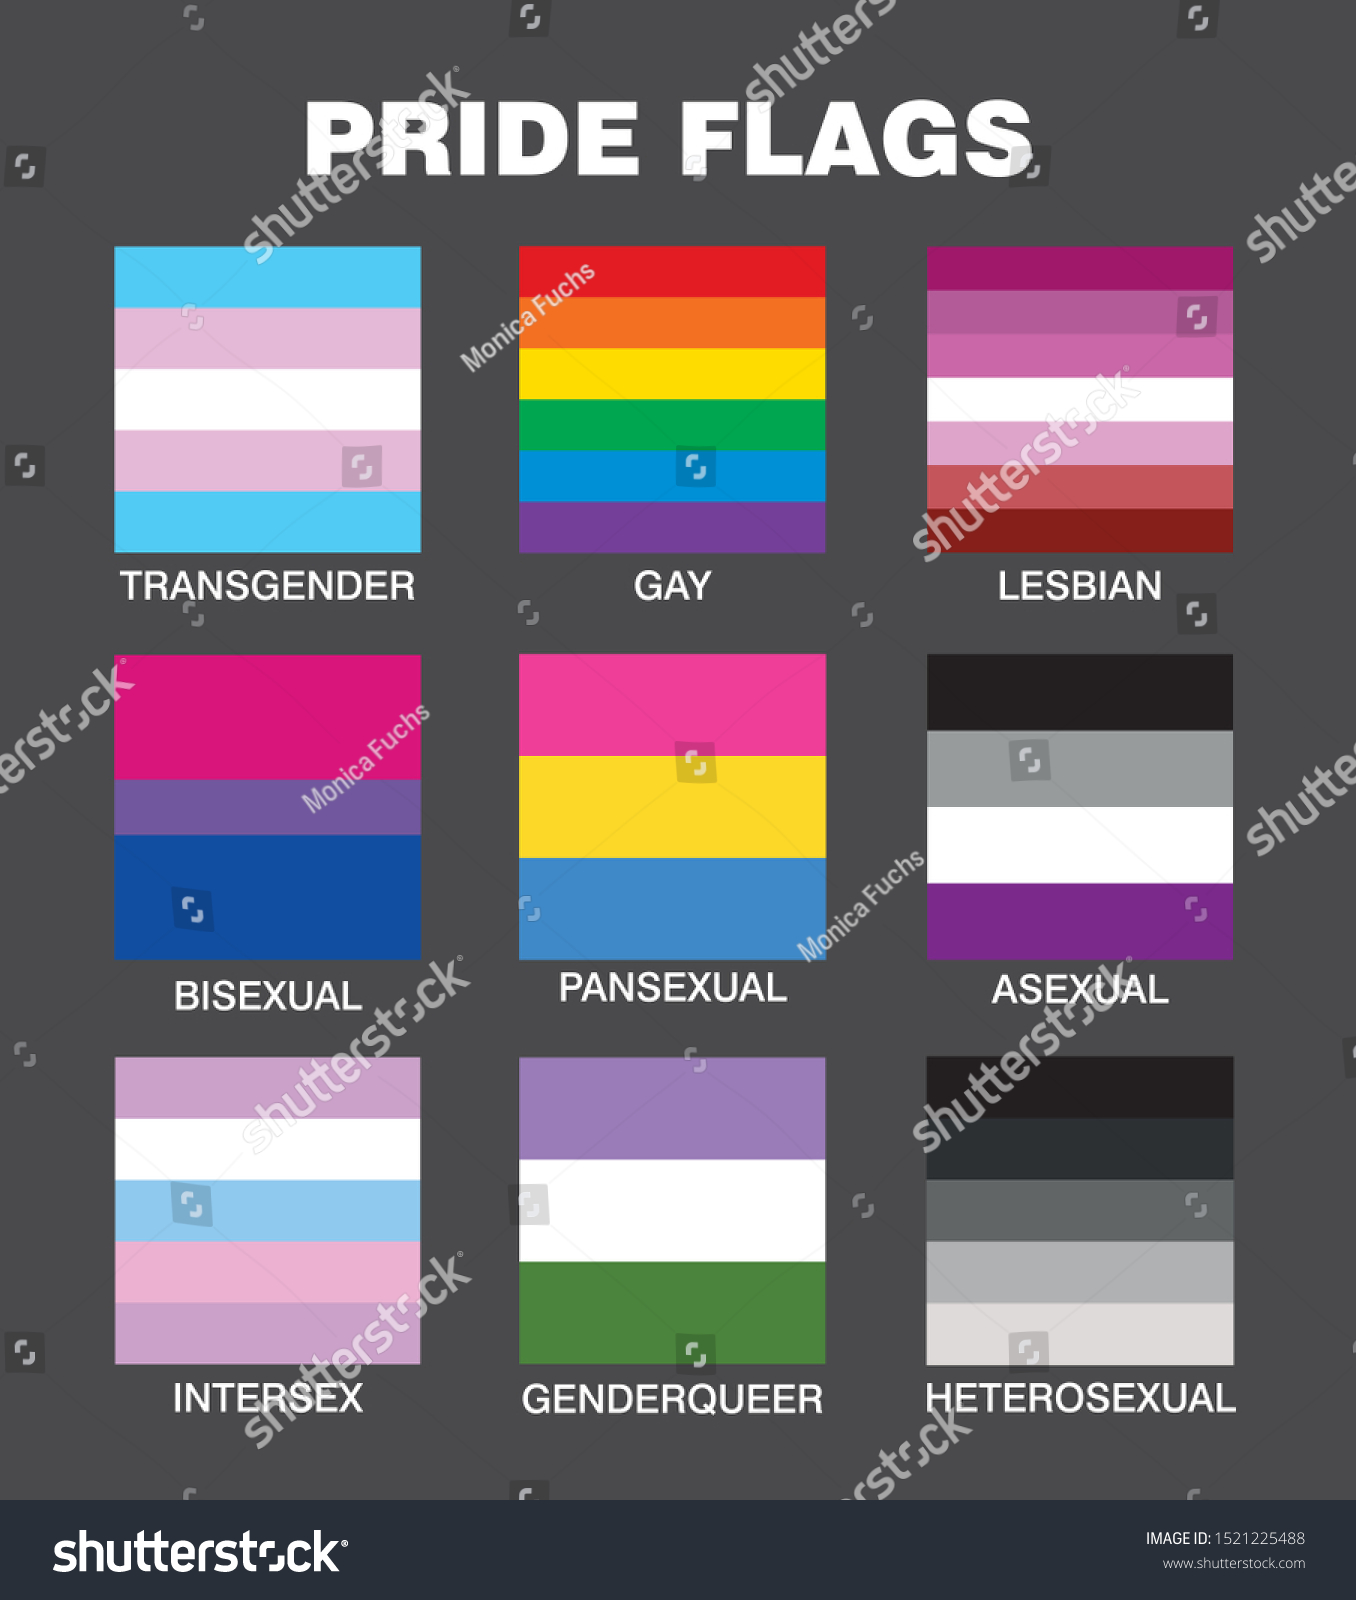 Bendera bisexual emoji